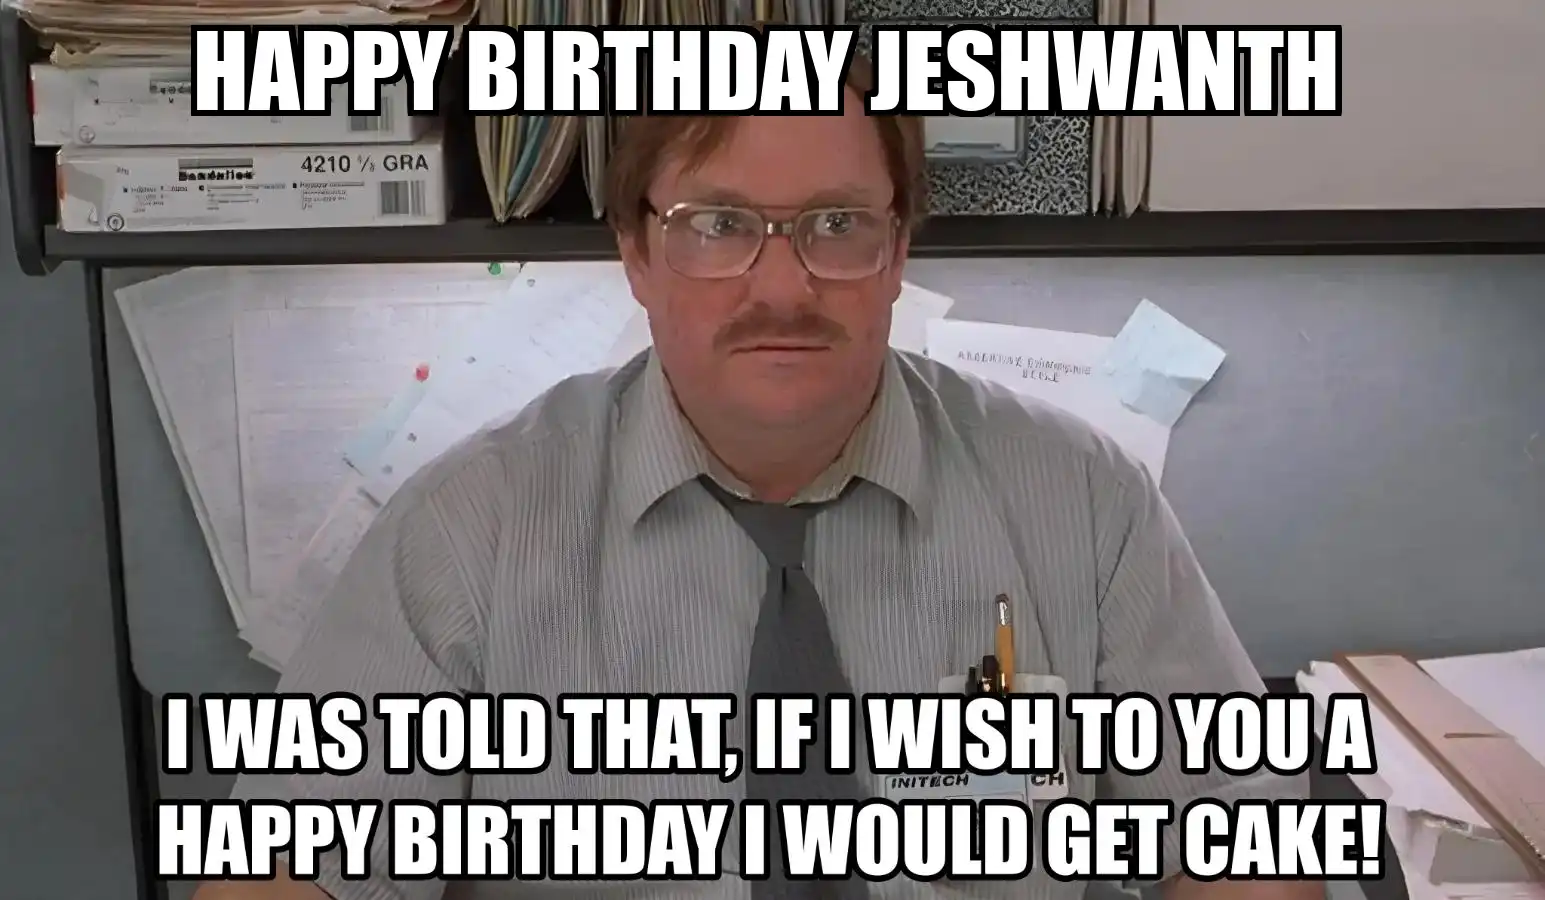 Happy Birthday Jeshwanth I Would Get A Cake Meme